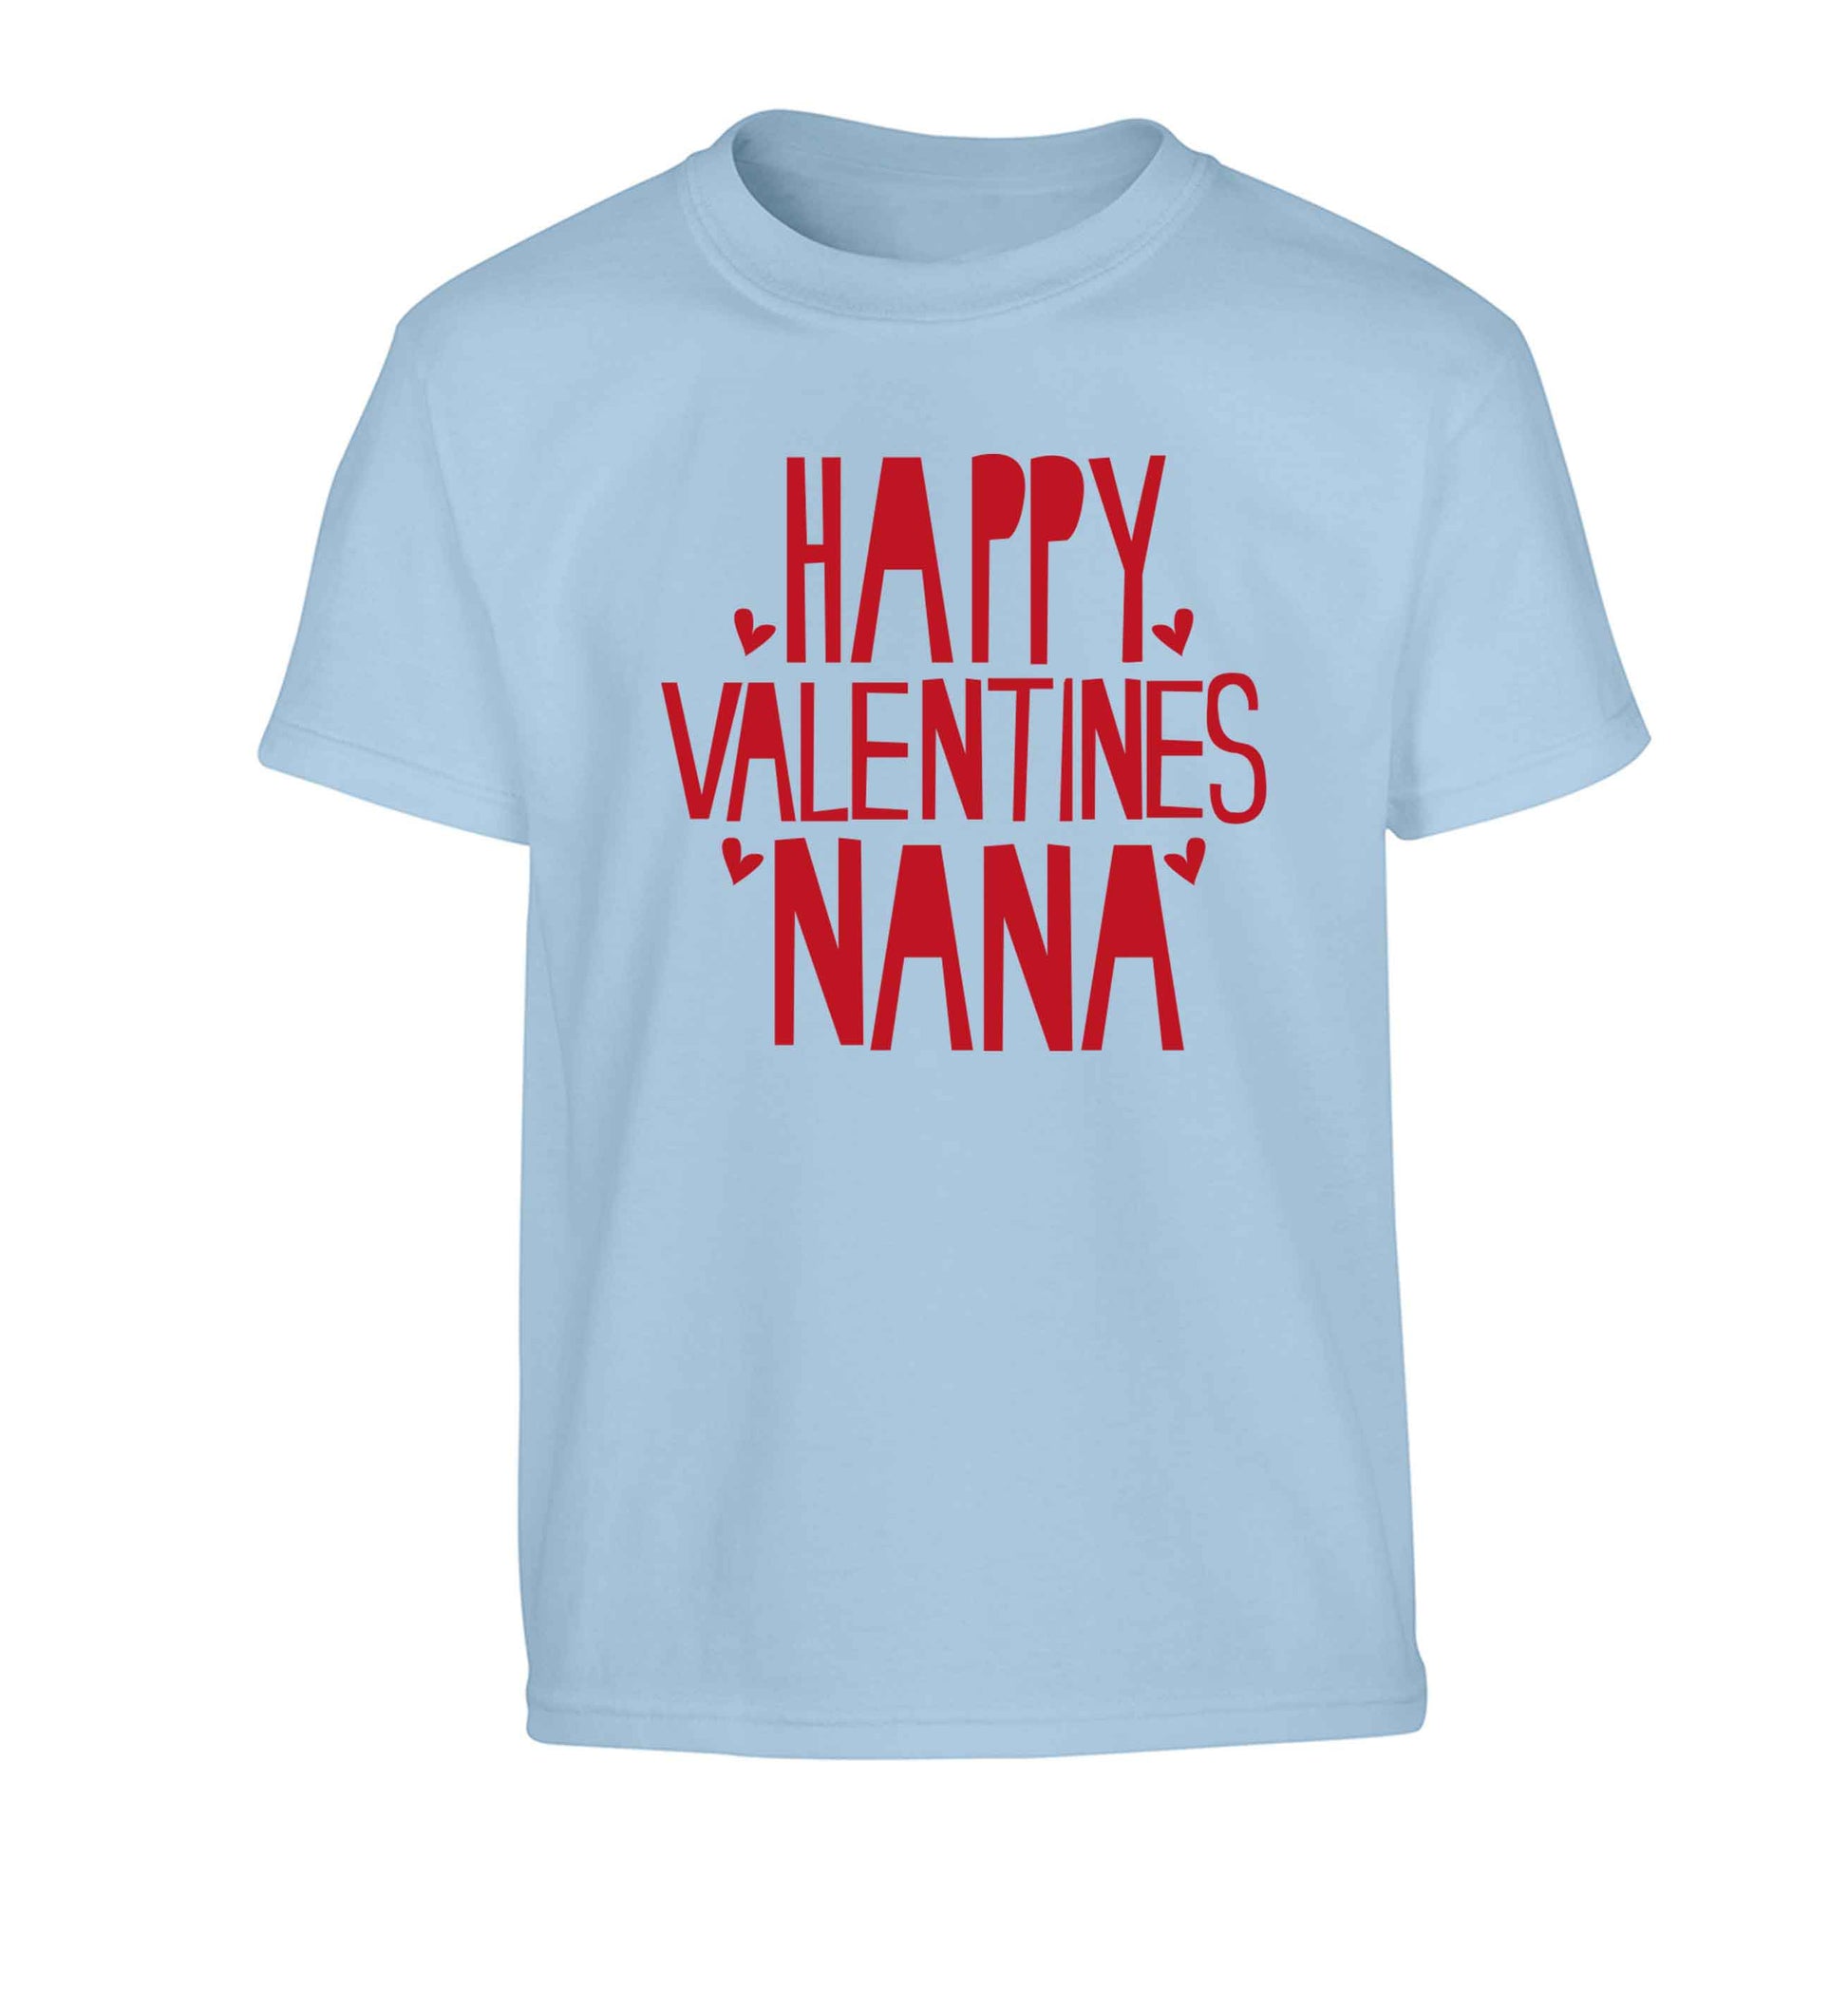 Happy valentines nana Children's light blue Tshirt 12-13 Years